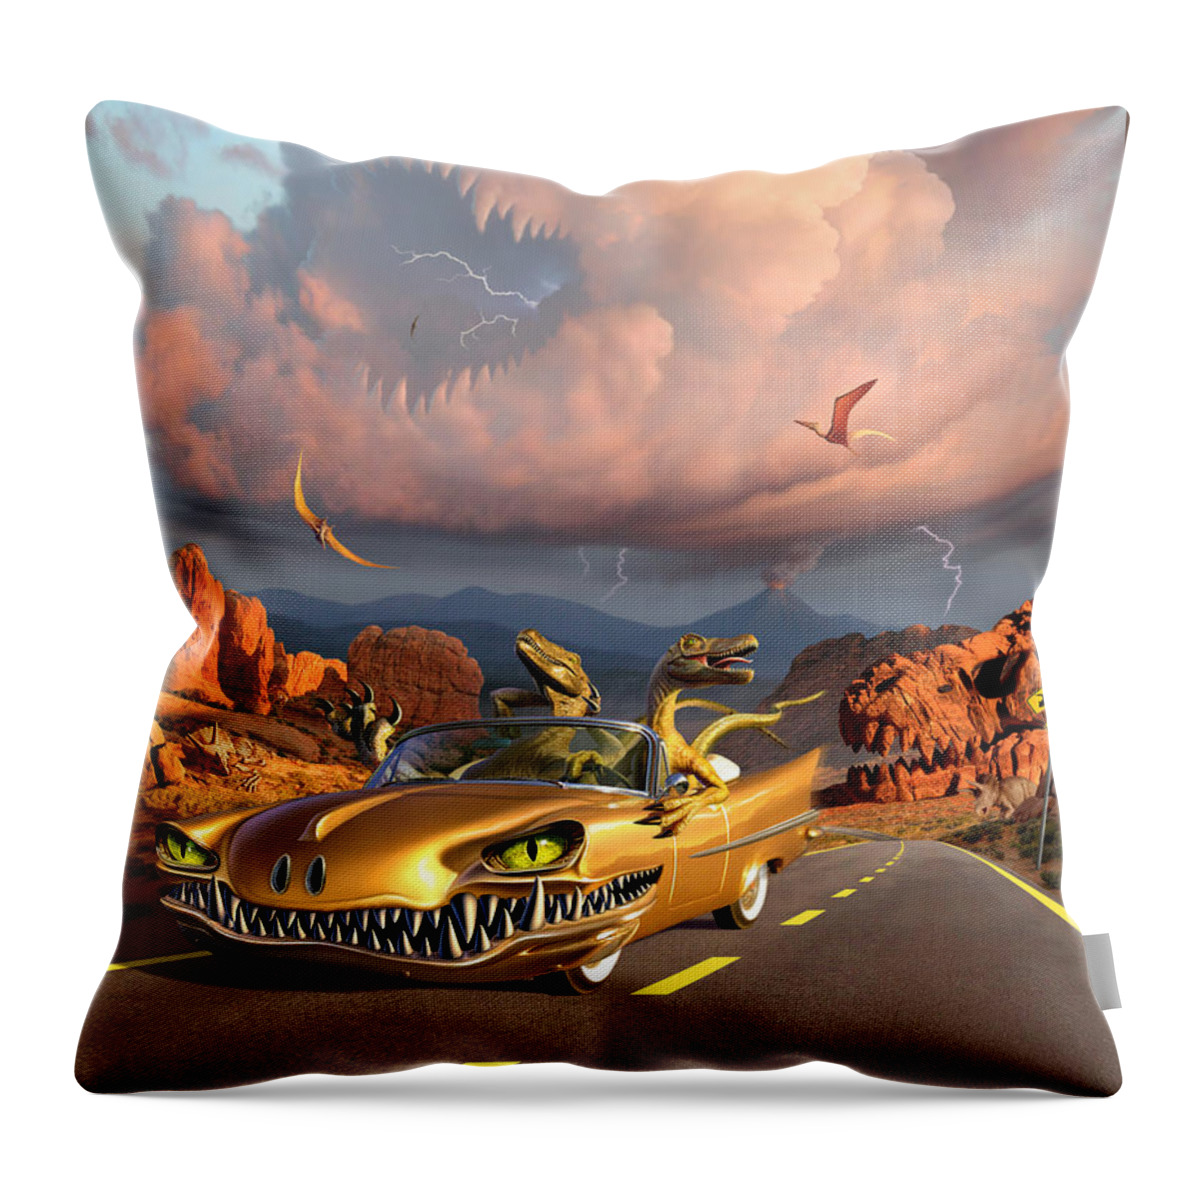 Dinosaurs Throw Pillow featuring the digital art Rapt Patrol by Jerry LoFaro